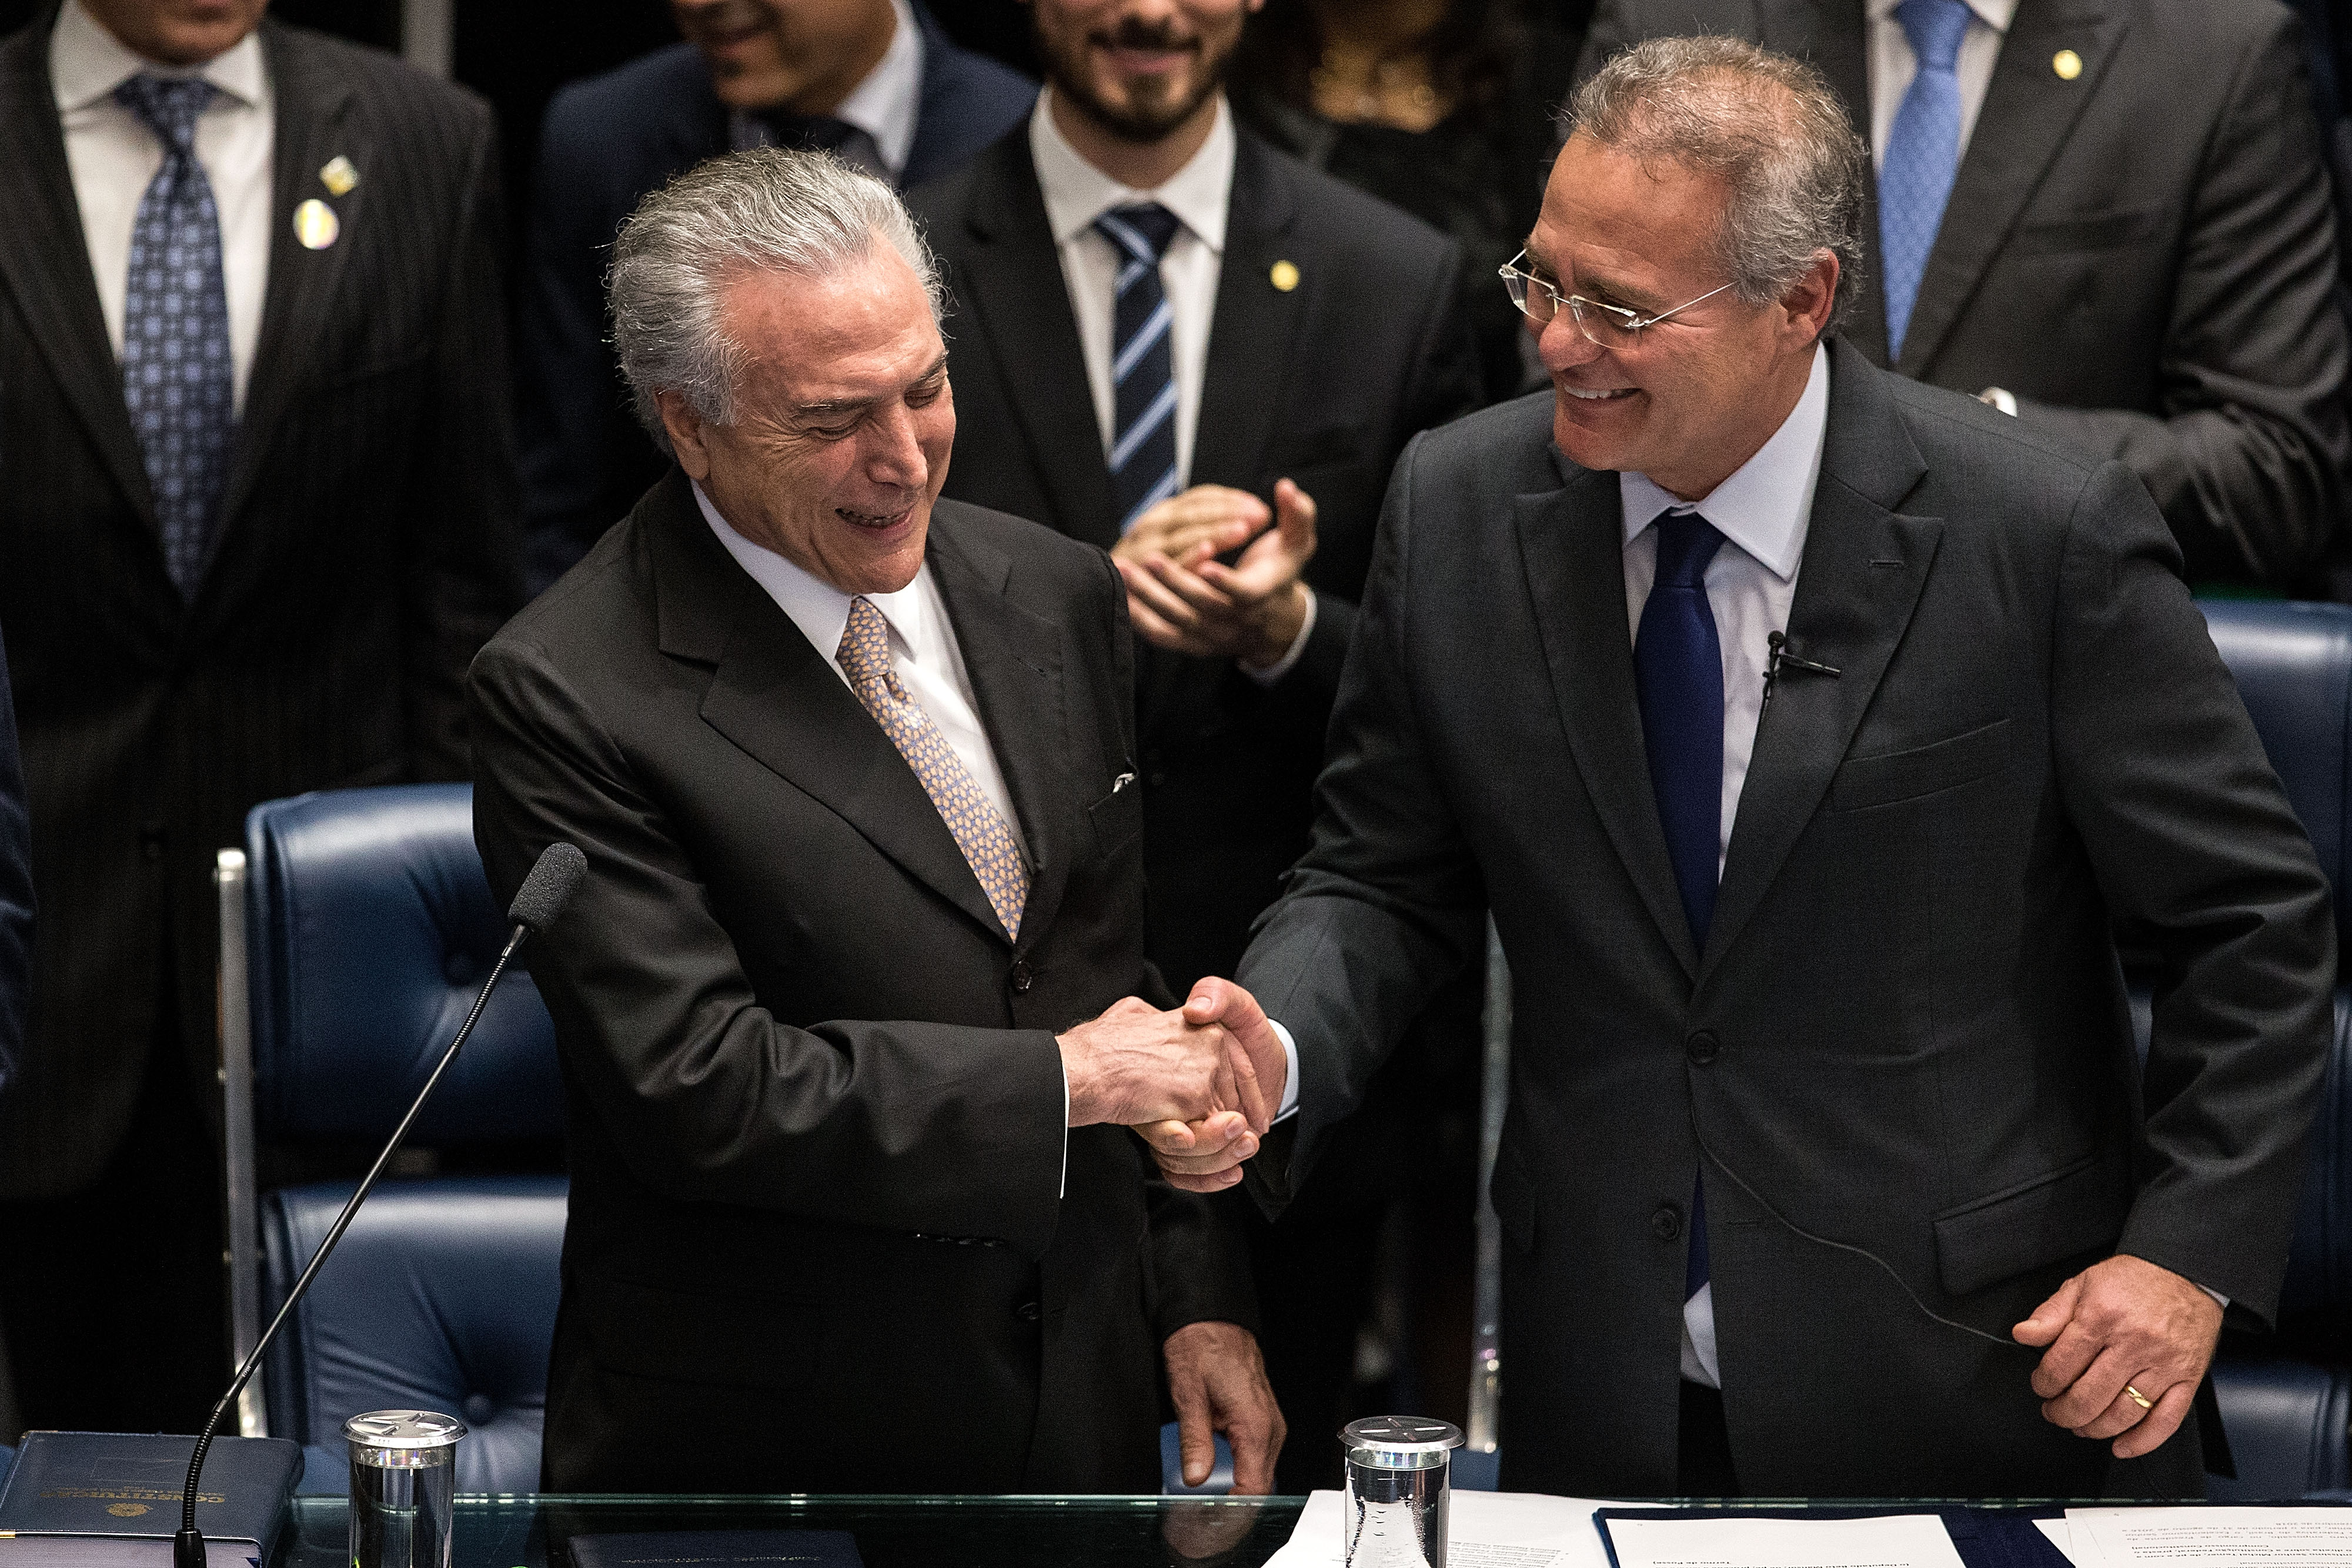 Michel Temer (L) shakes hands with Brazilian Senate President Renan Calheiros during his swear-in ceremony as President of Brazil in Brasilia, Brazil, Aug. 31, 2016. (Xinhua—Xinhua/Sipa USA)